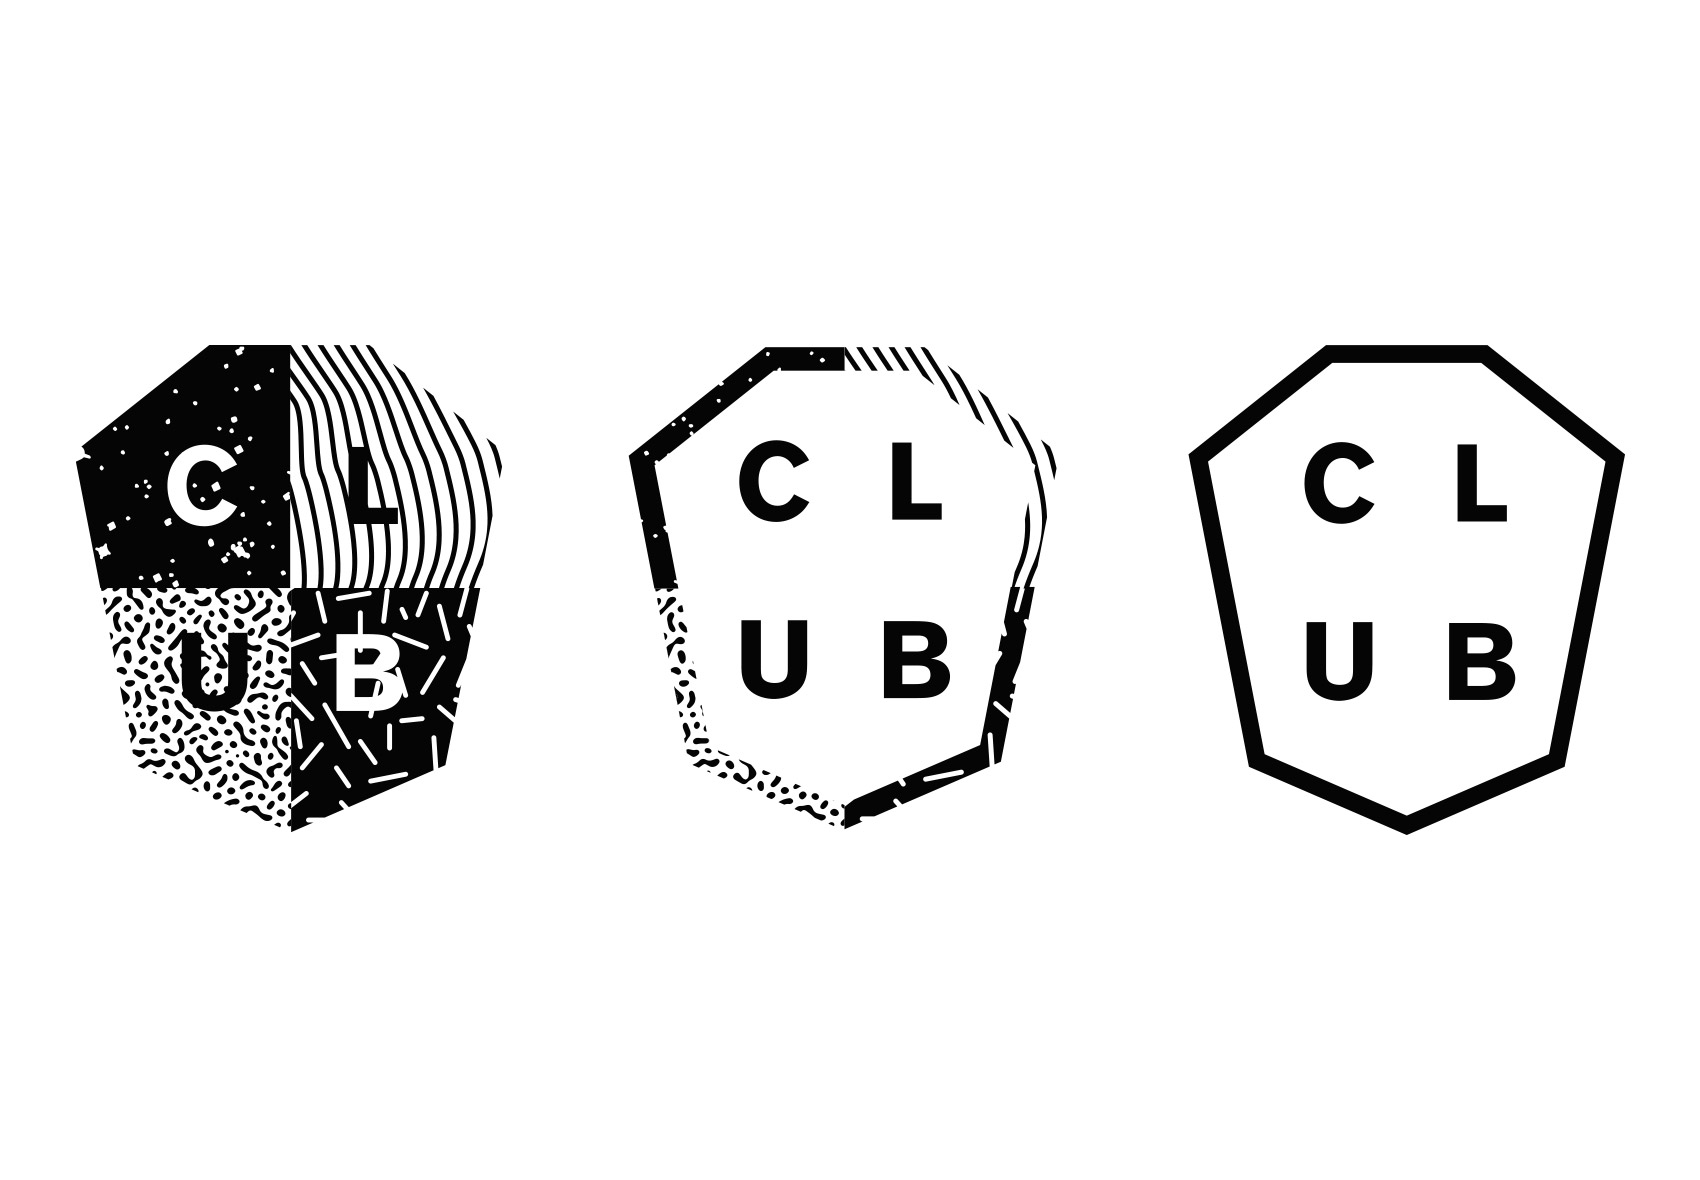 le-club-logo